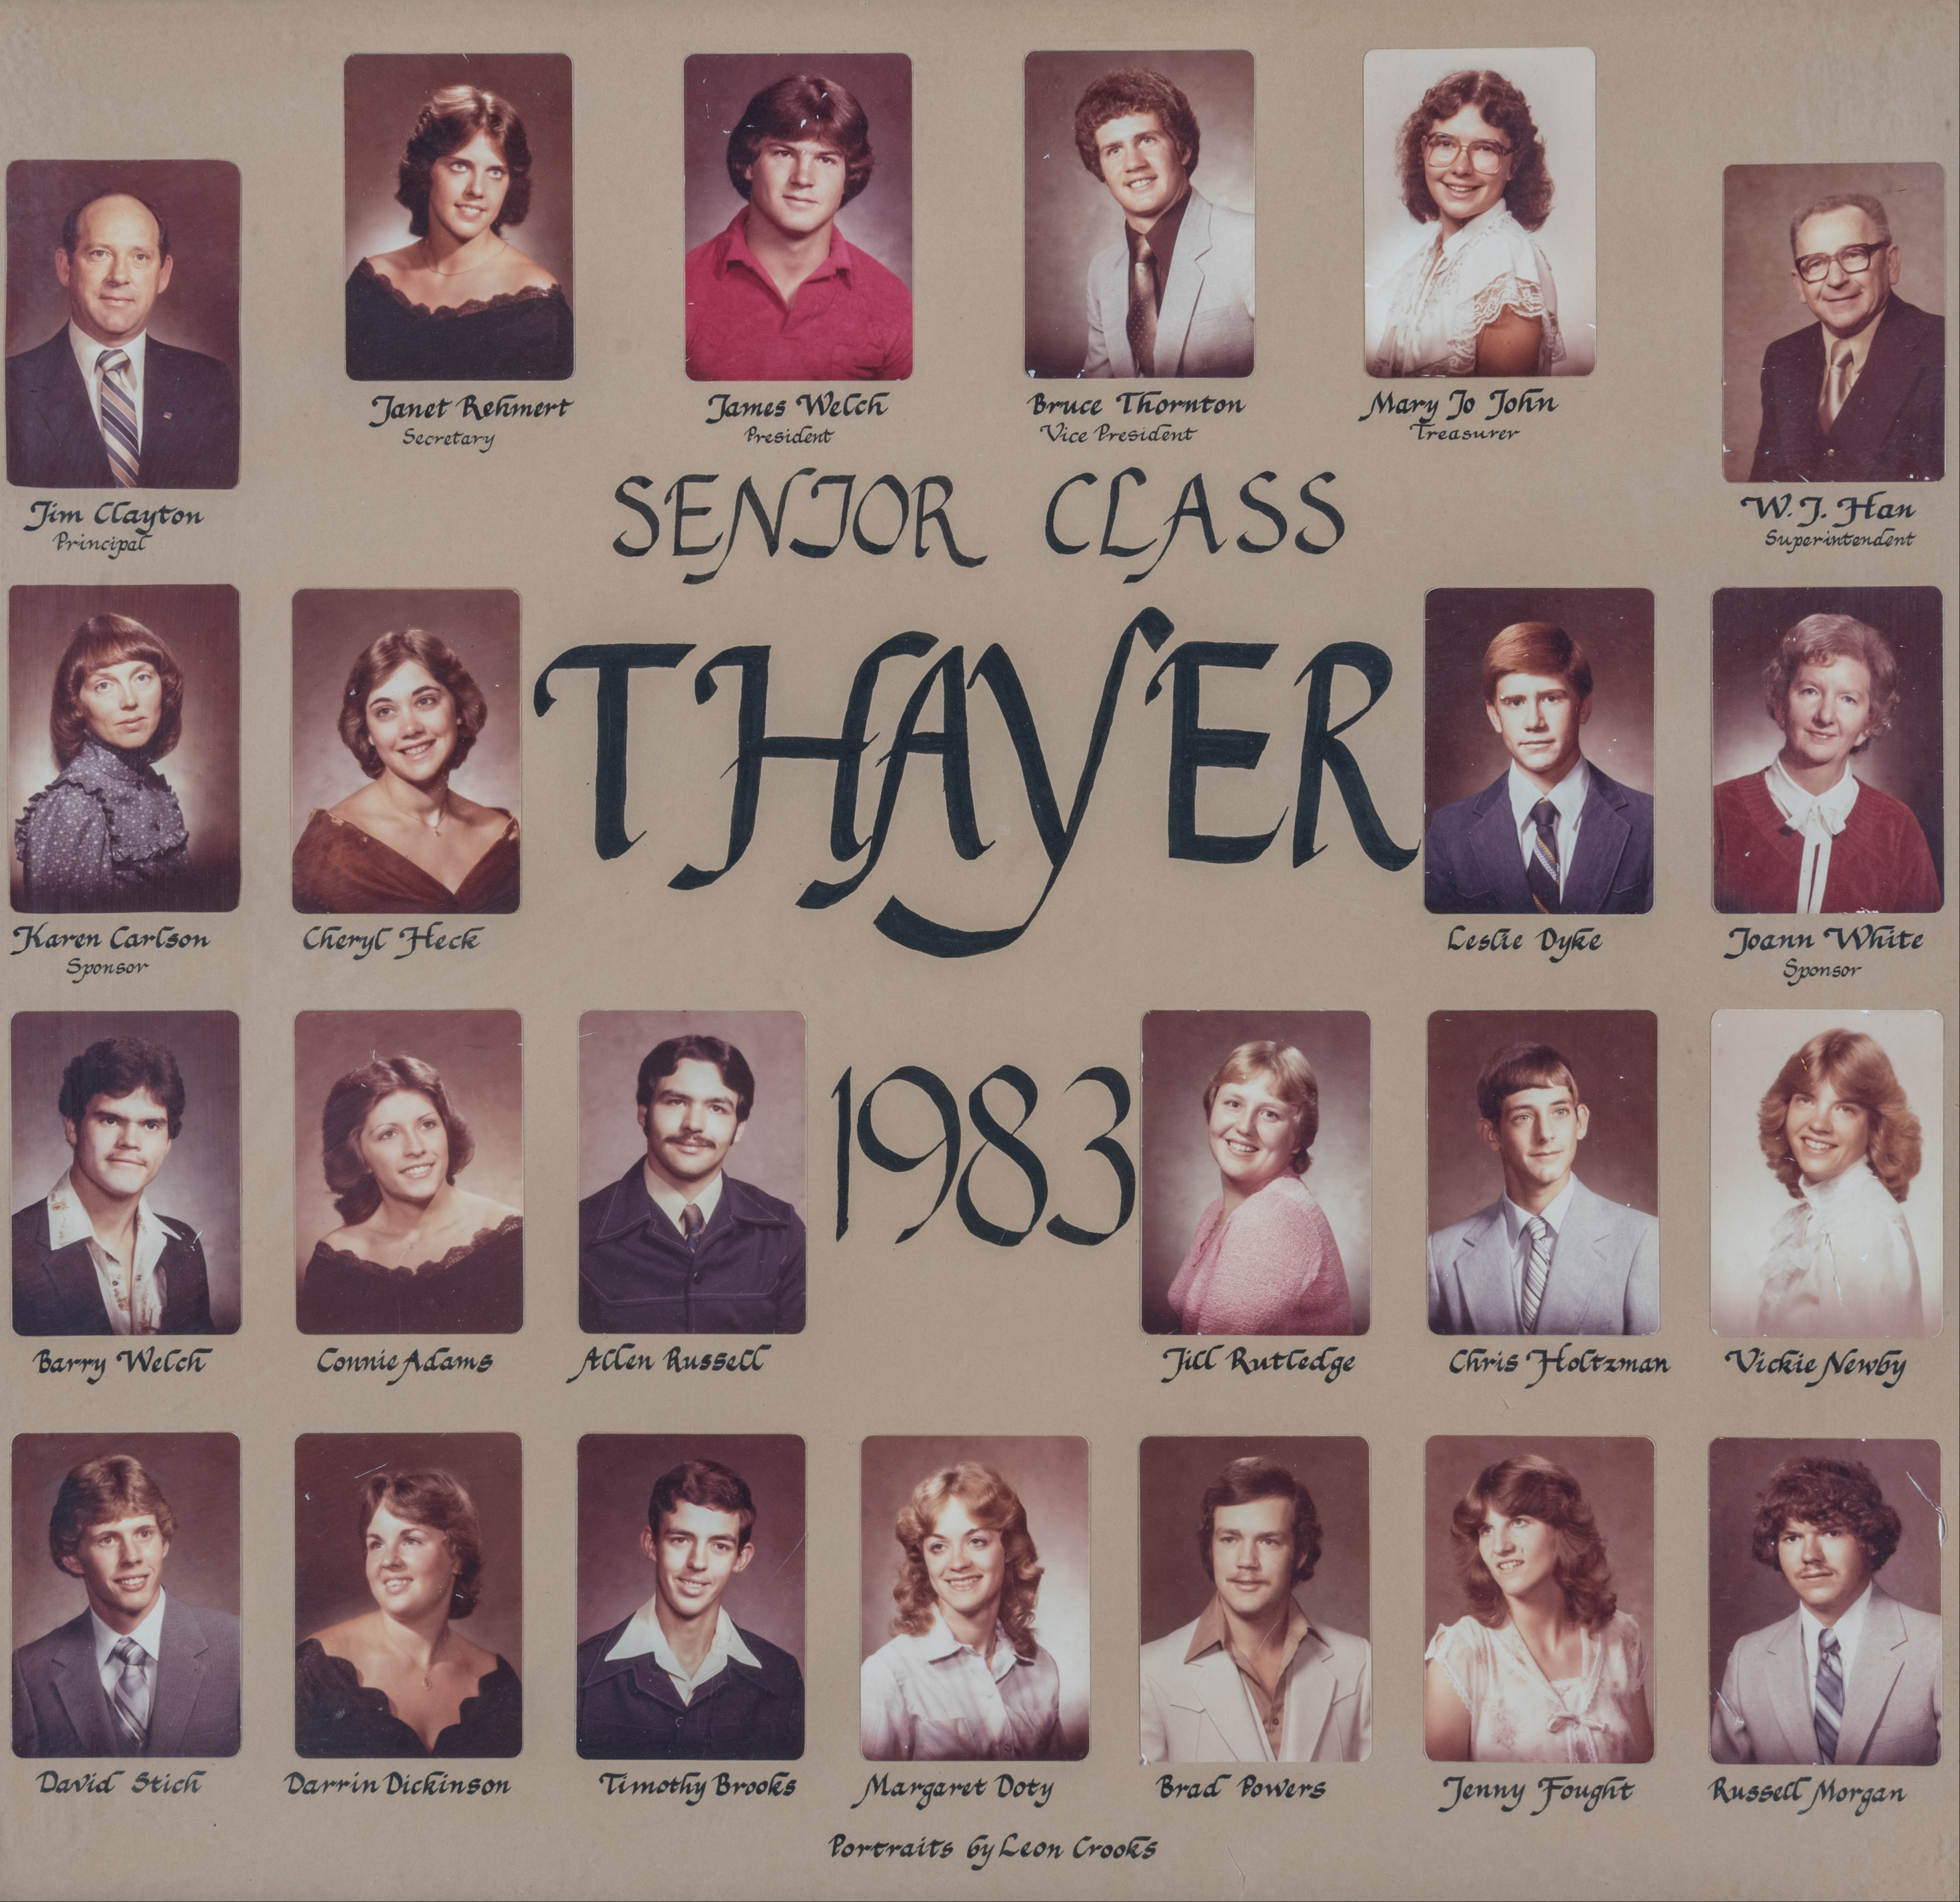 Class of 1983